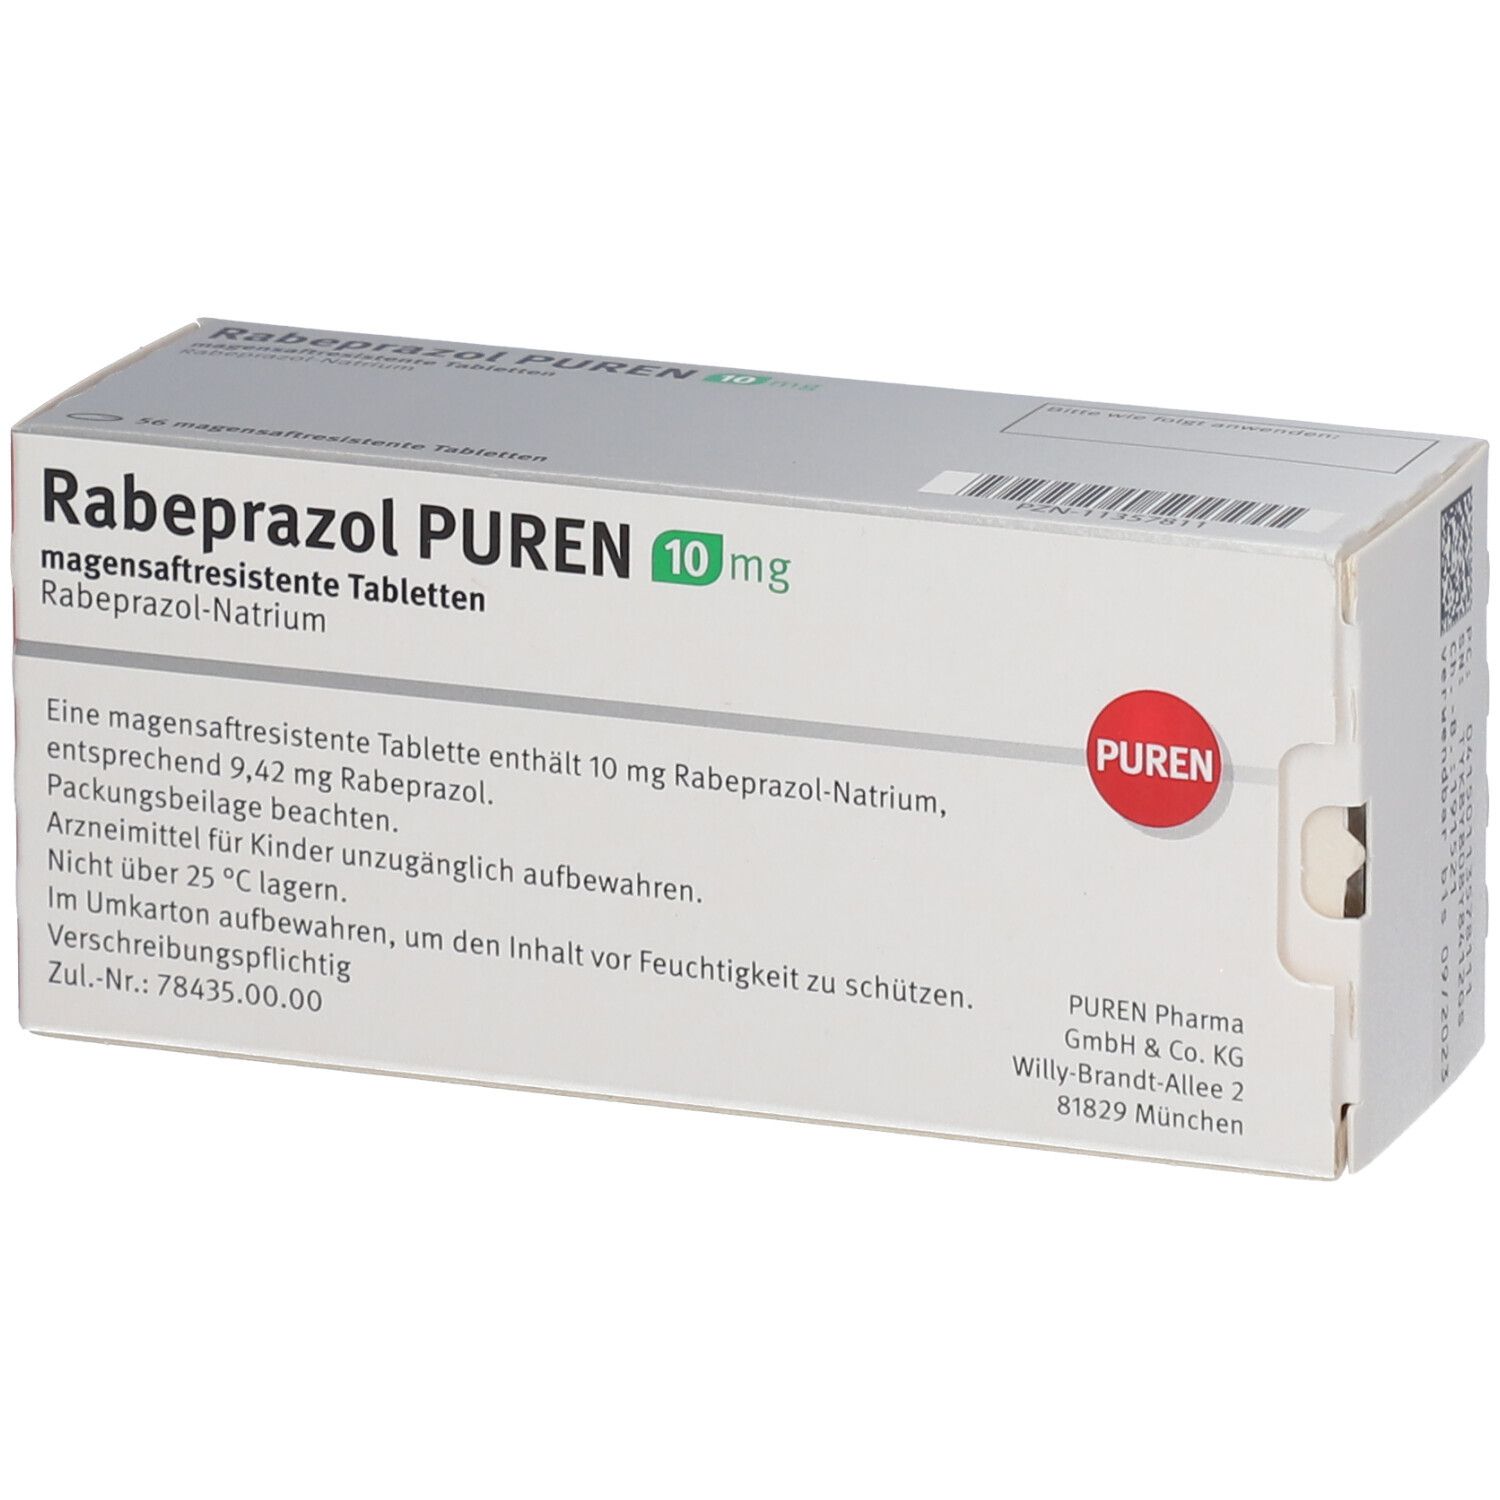 Rabeprazol PUREN 10 mg